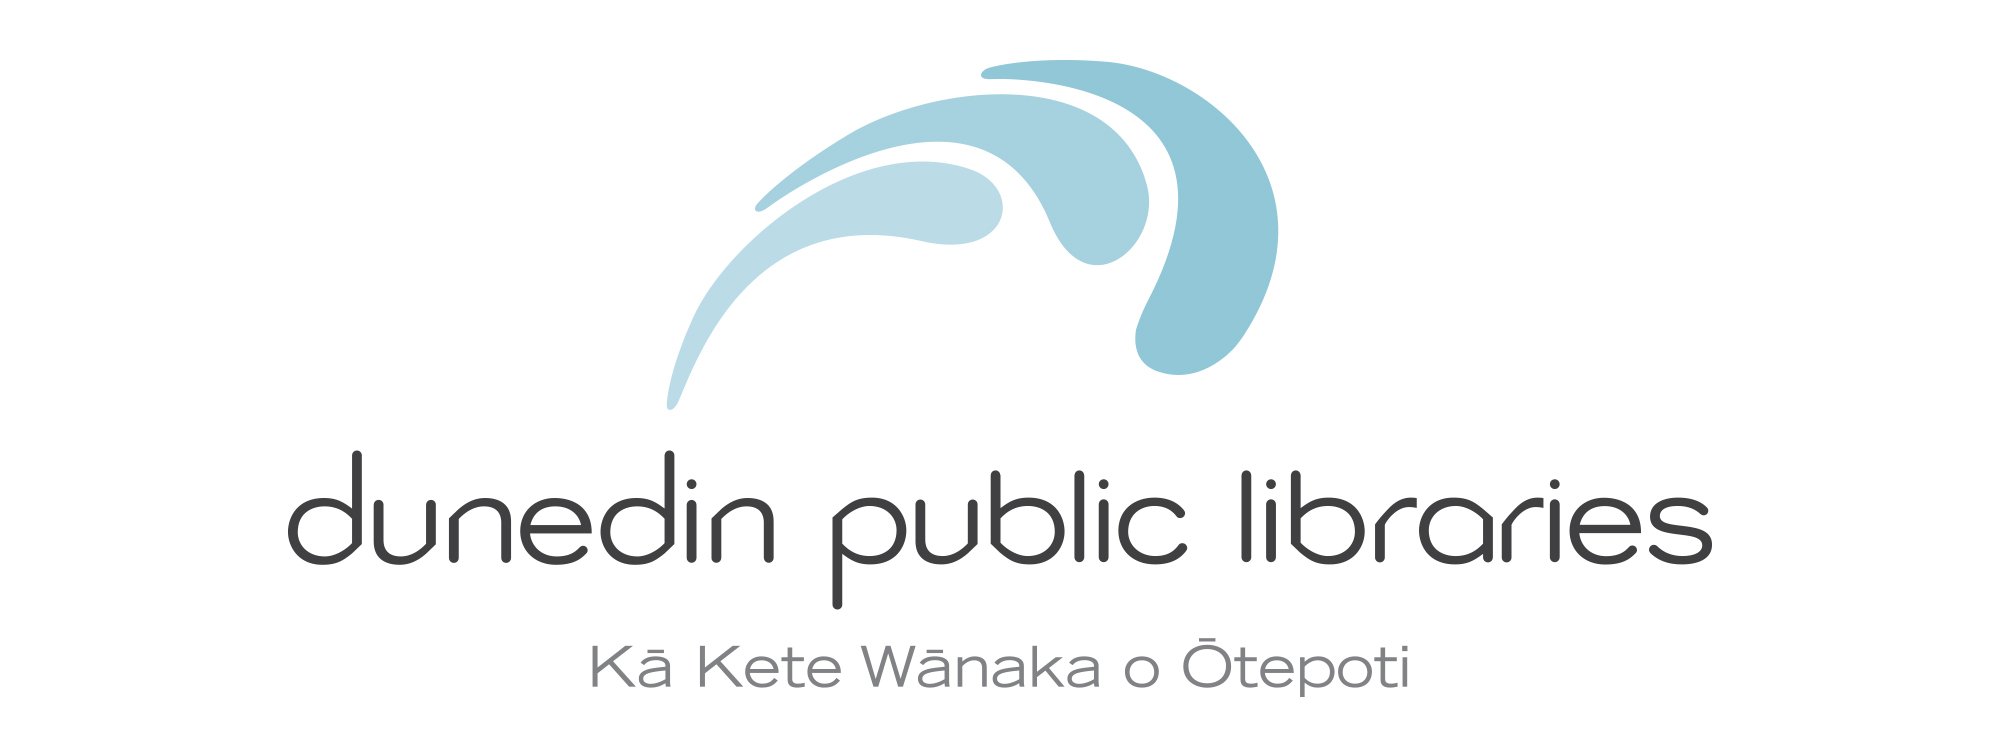 Dunedin Public Libraries logo.jpeg